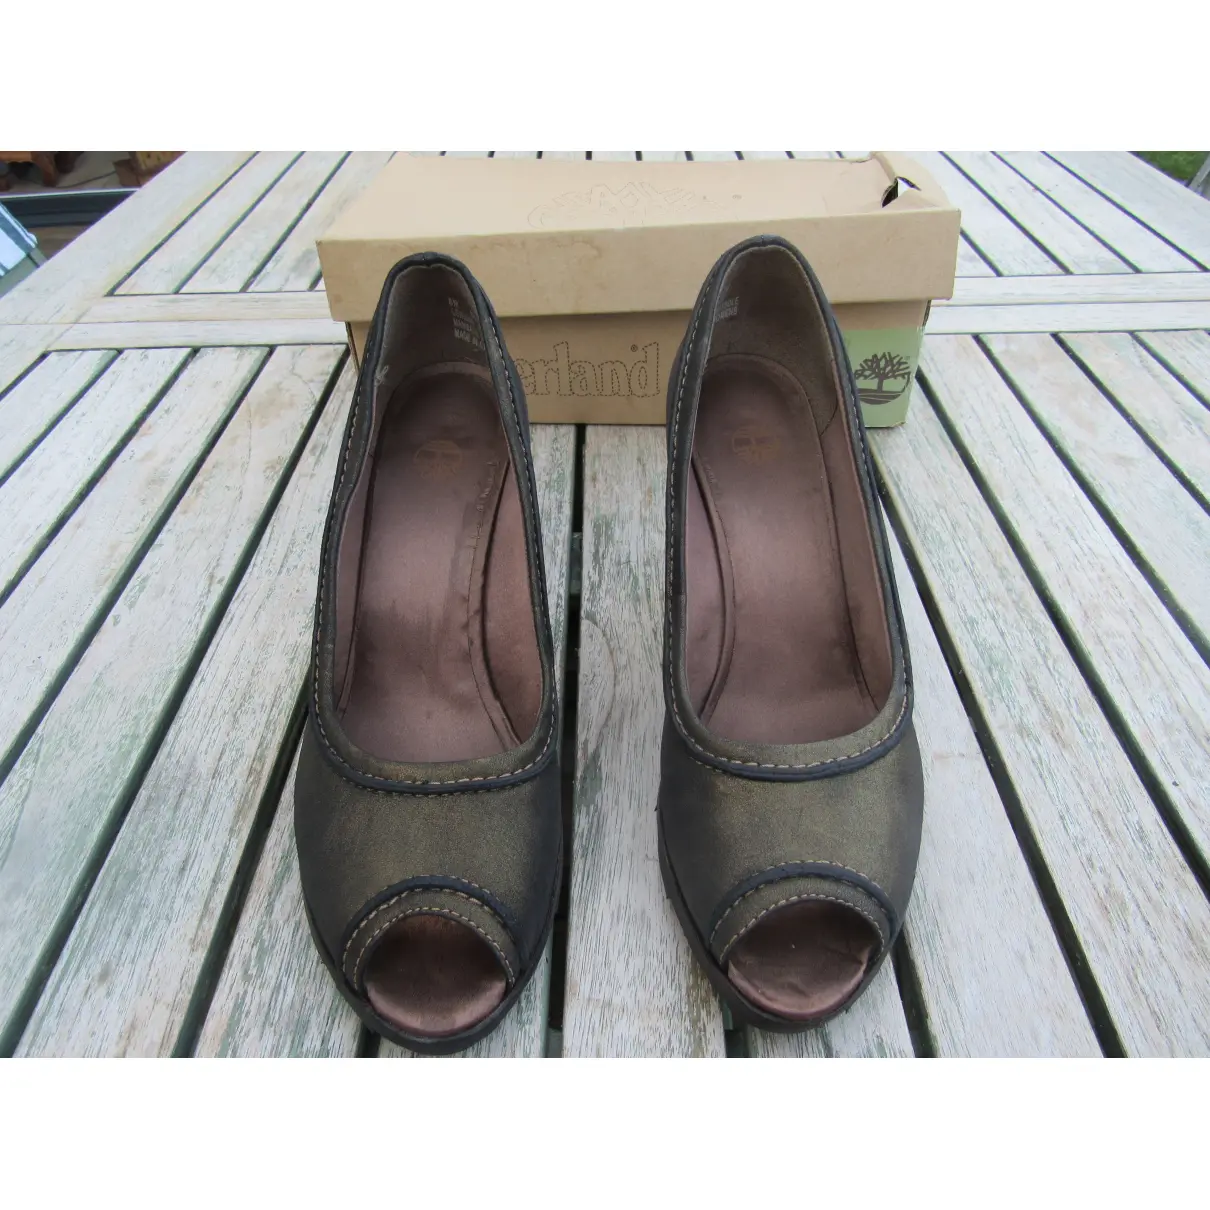 Buy Timberland Leather heels online